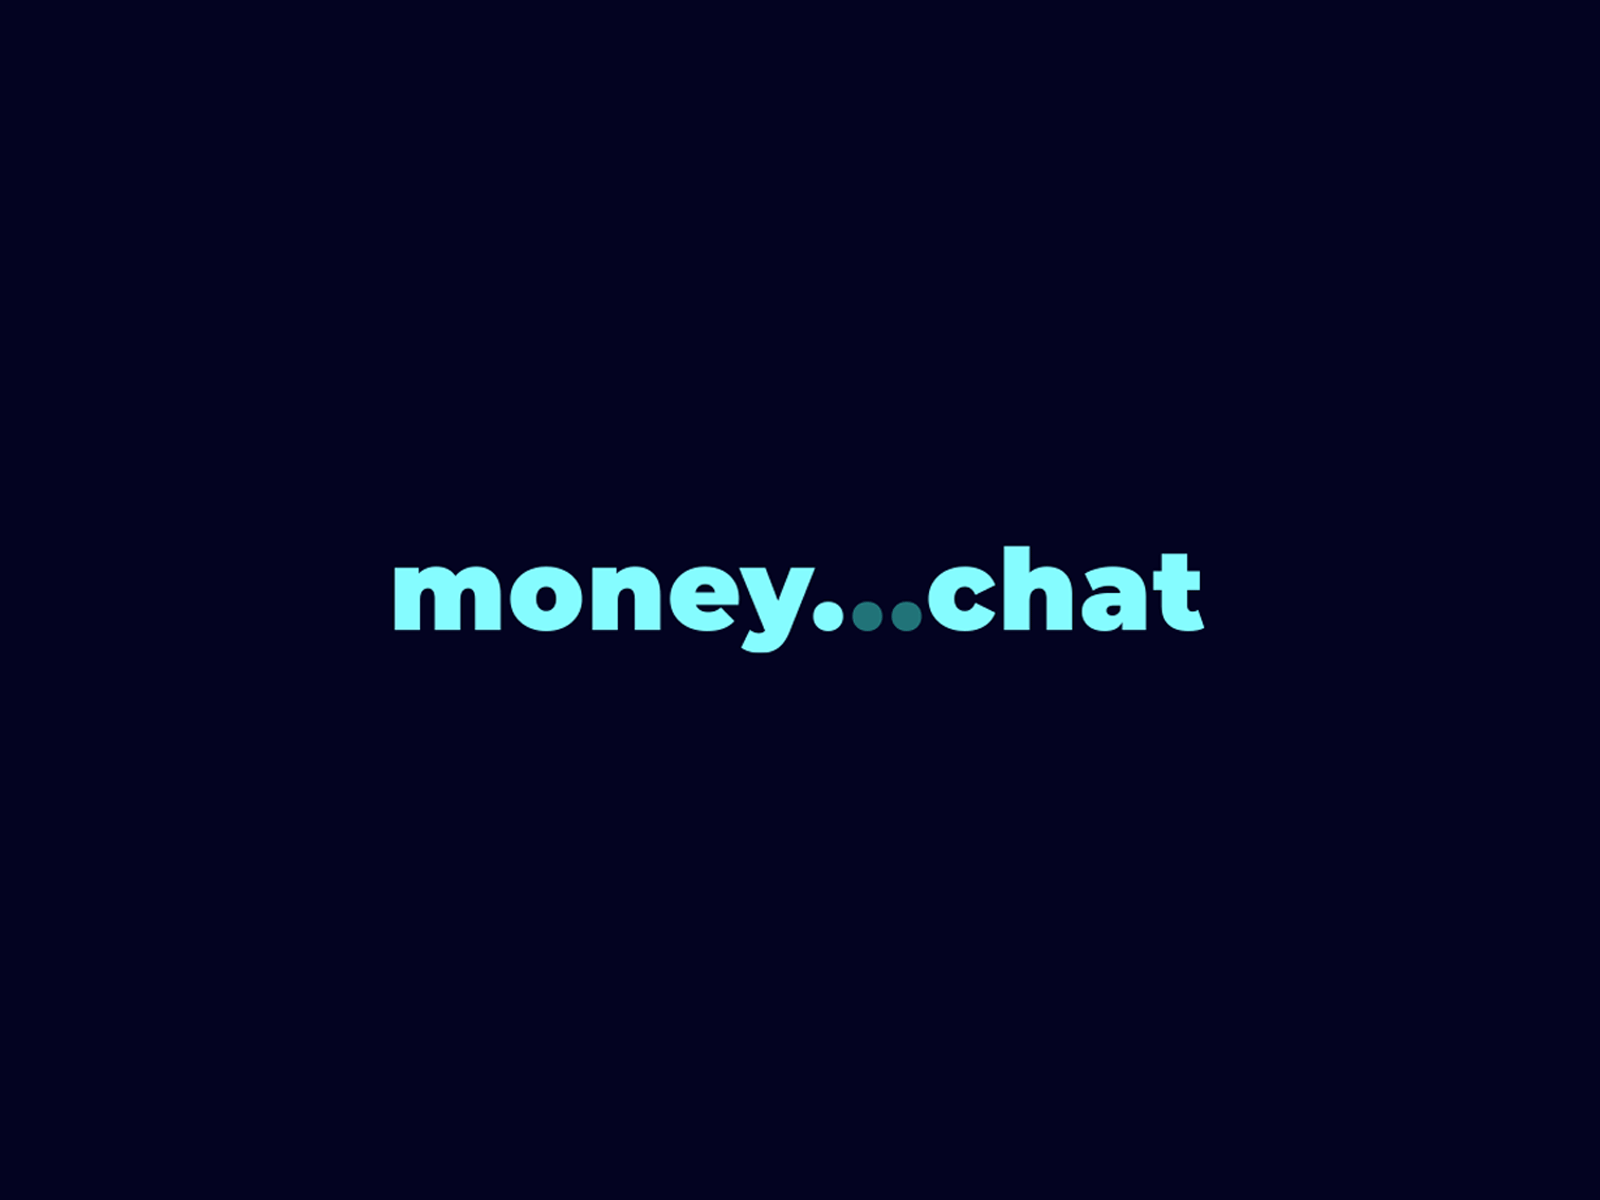 Money Chat